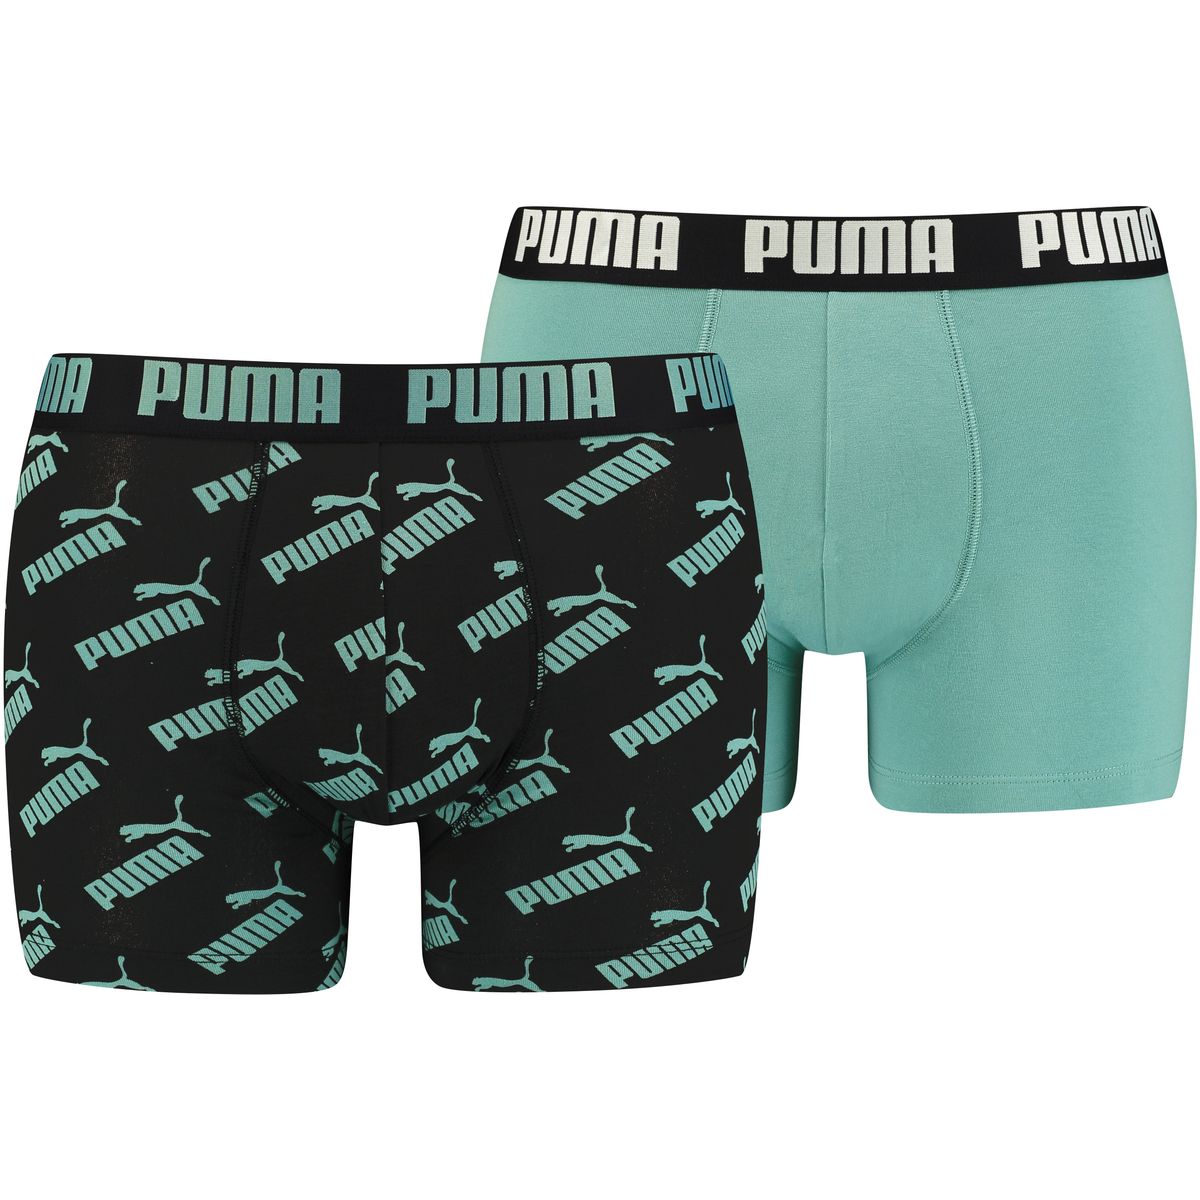 Puma Aop Boxer 2er-Pack Herren Unterhose